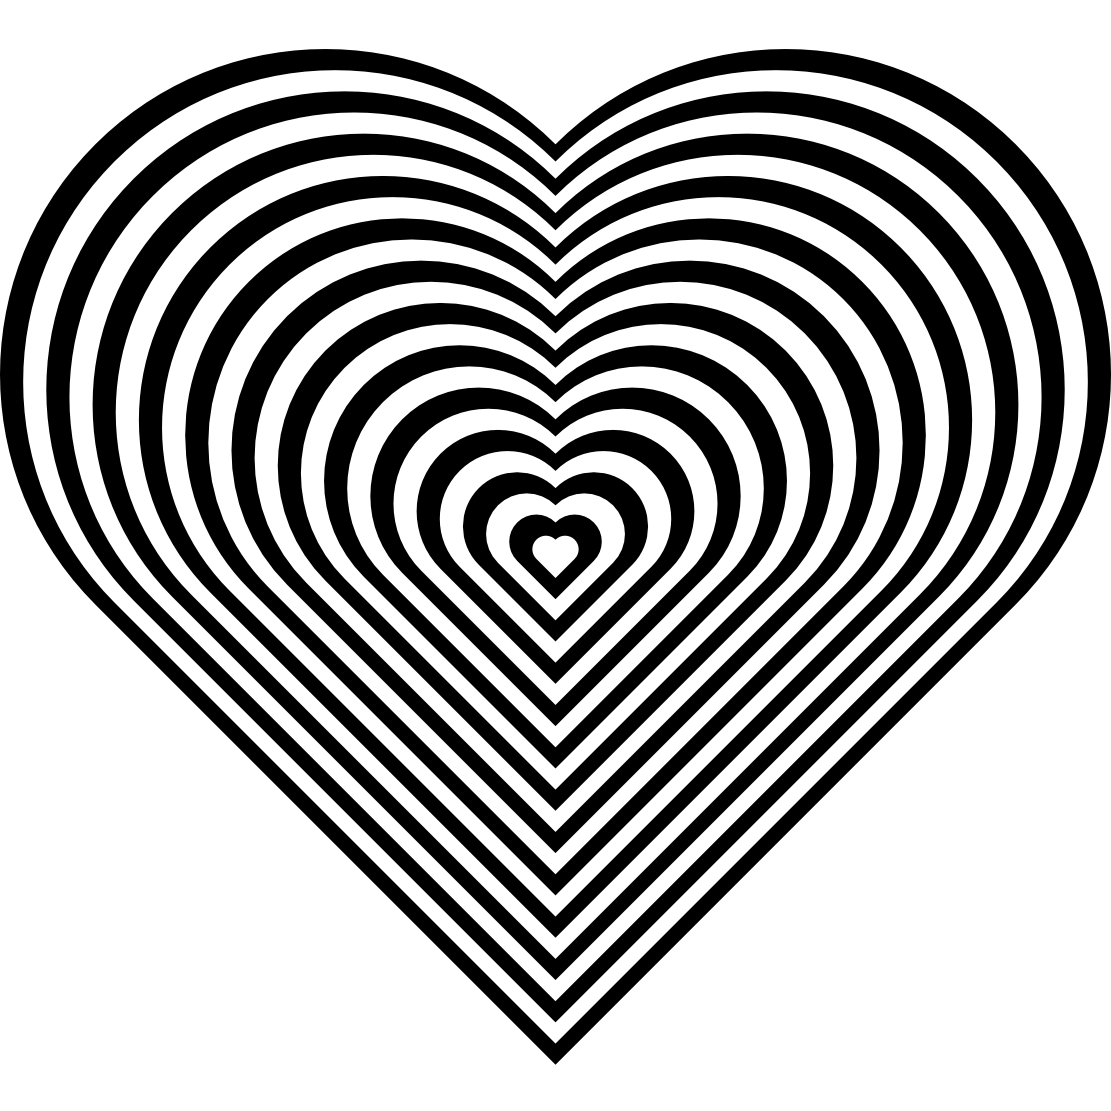 Раскраска: Сердце Мандалы (мандалы) #116710 - Бесплатные раскраски для печати